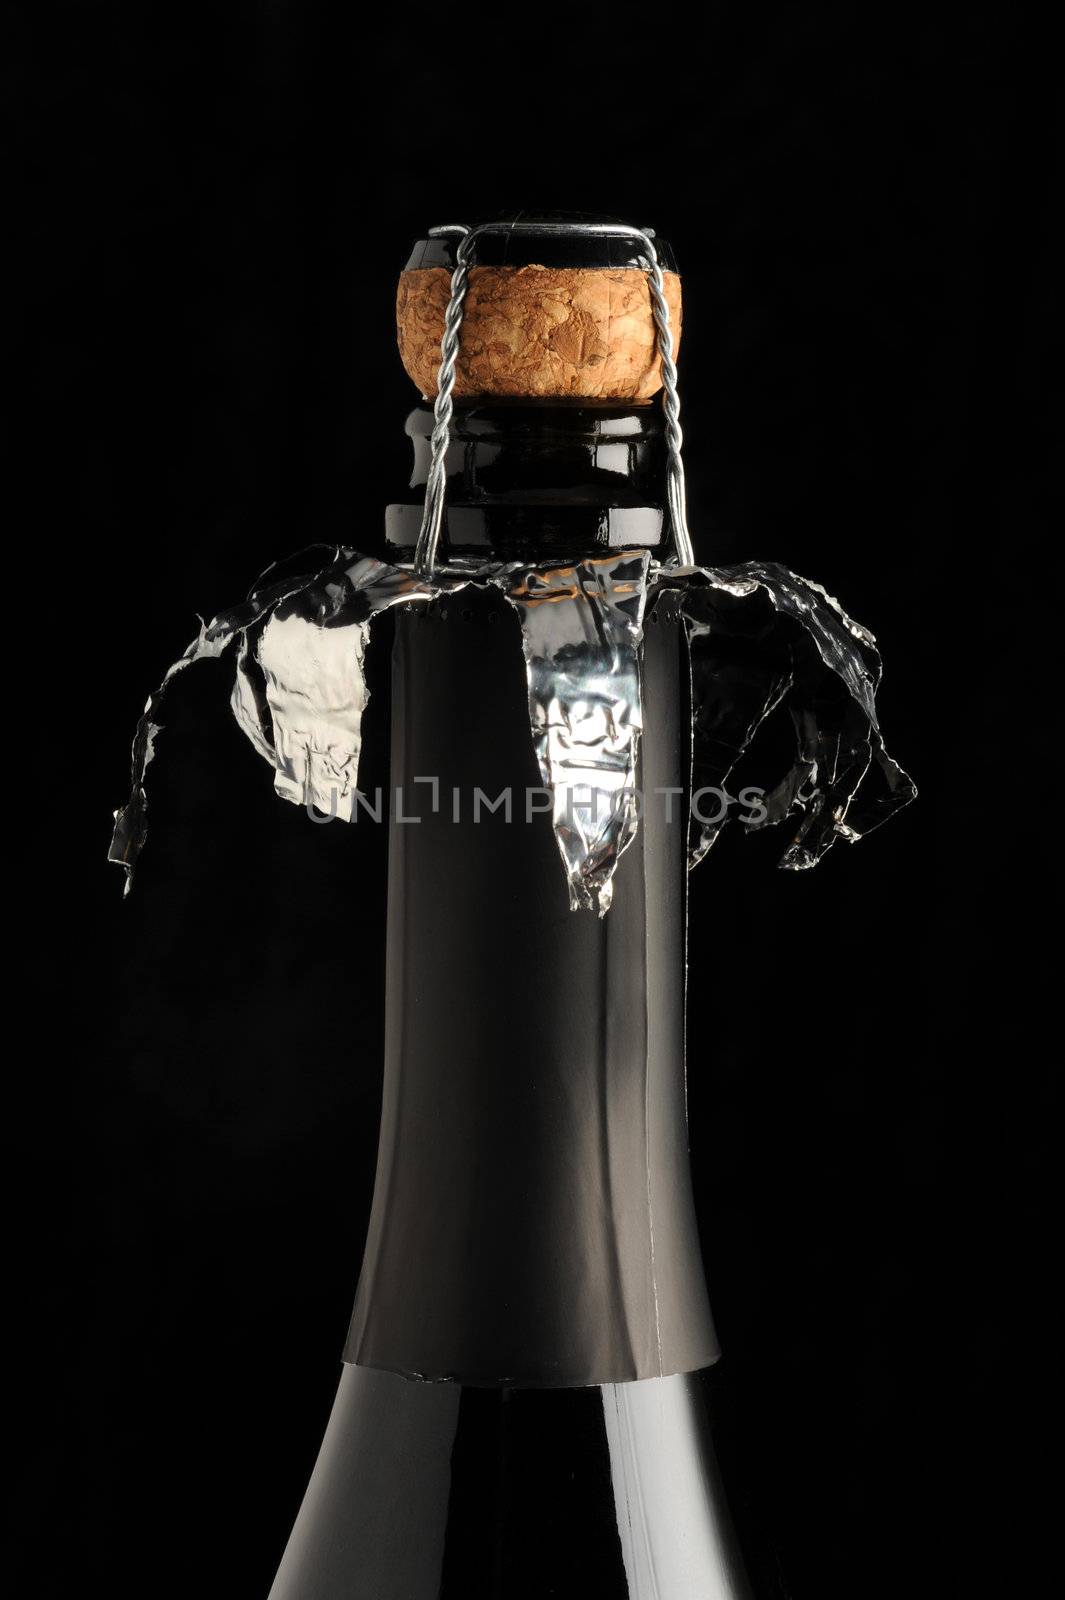 sparkling wine cap on black background